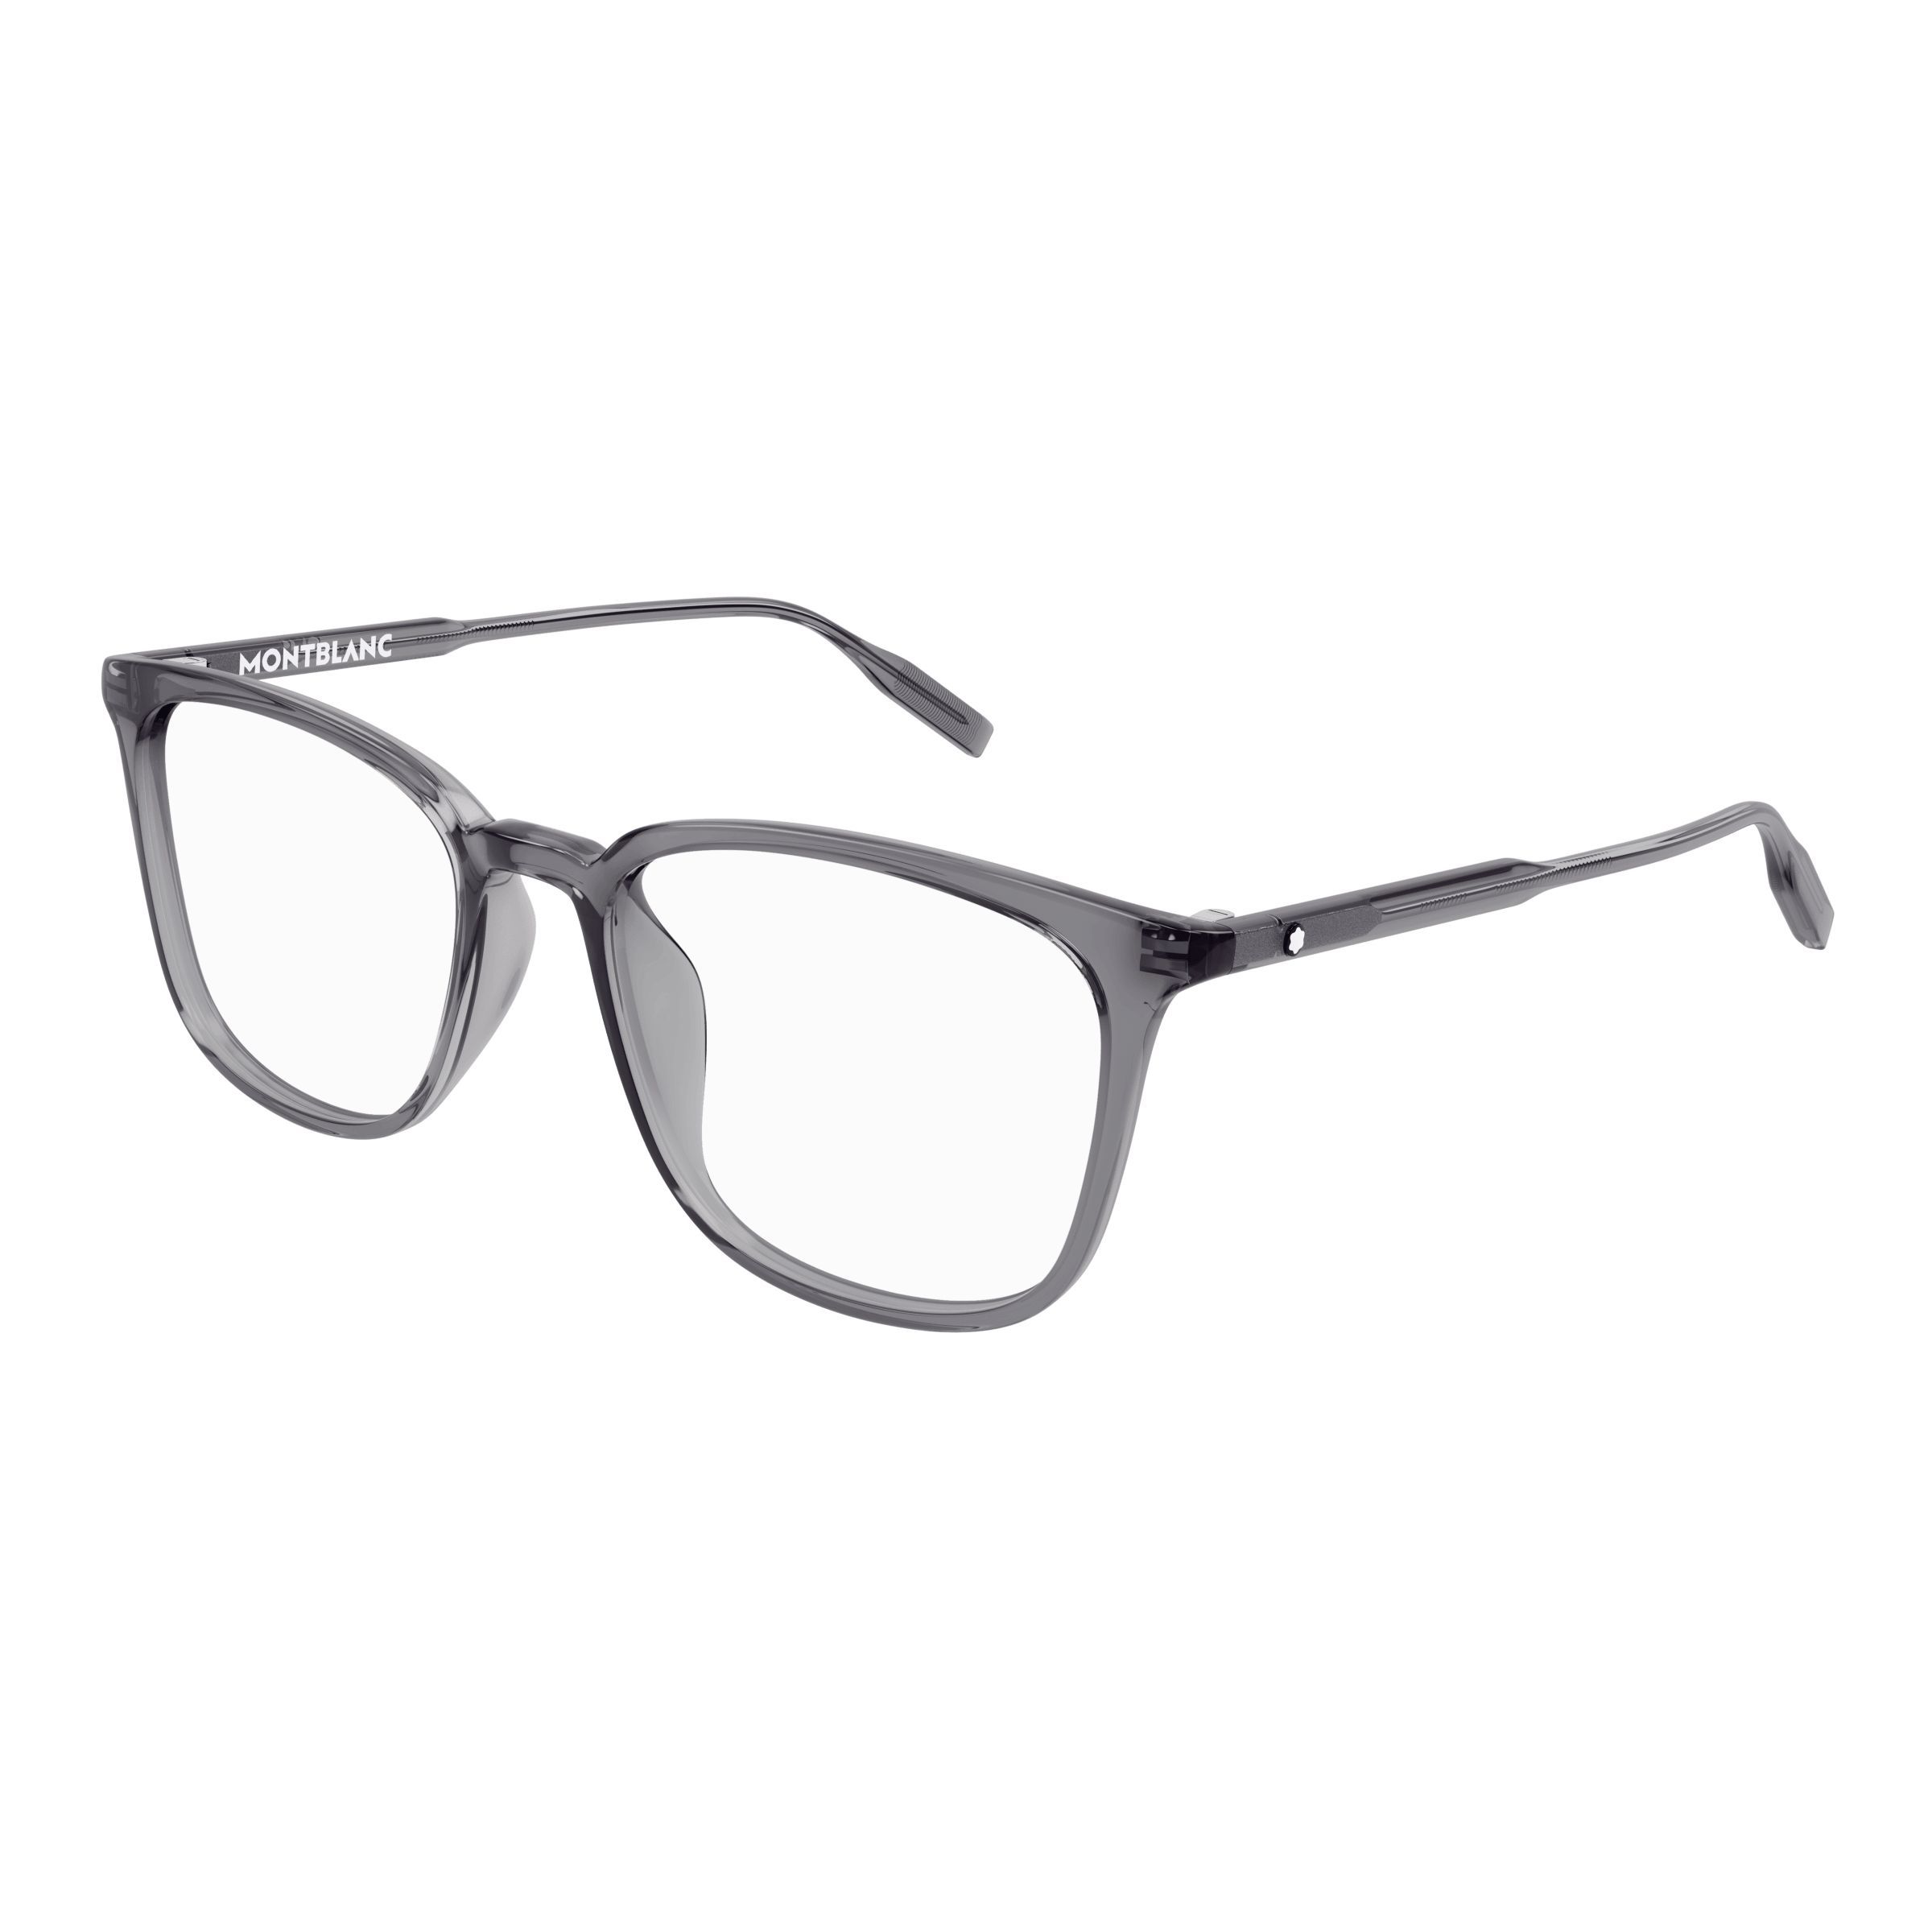 MB0089OK Square Eyeglasses 010 - size 52